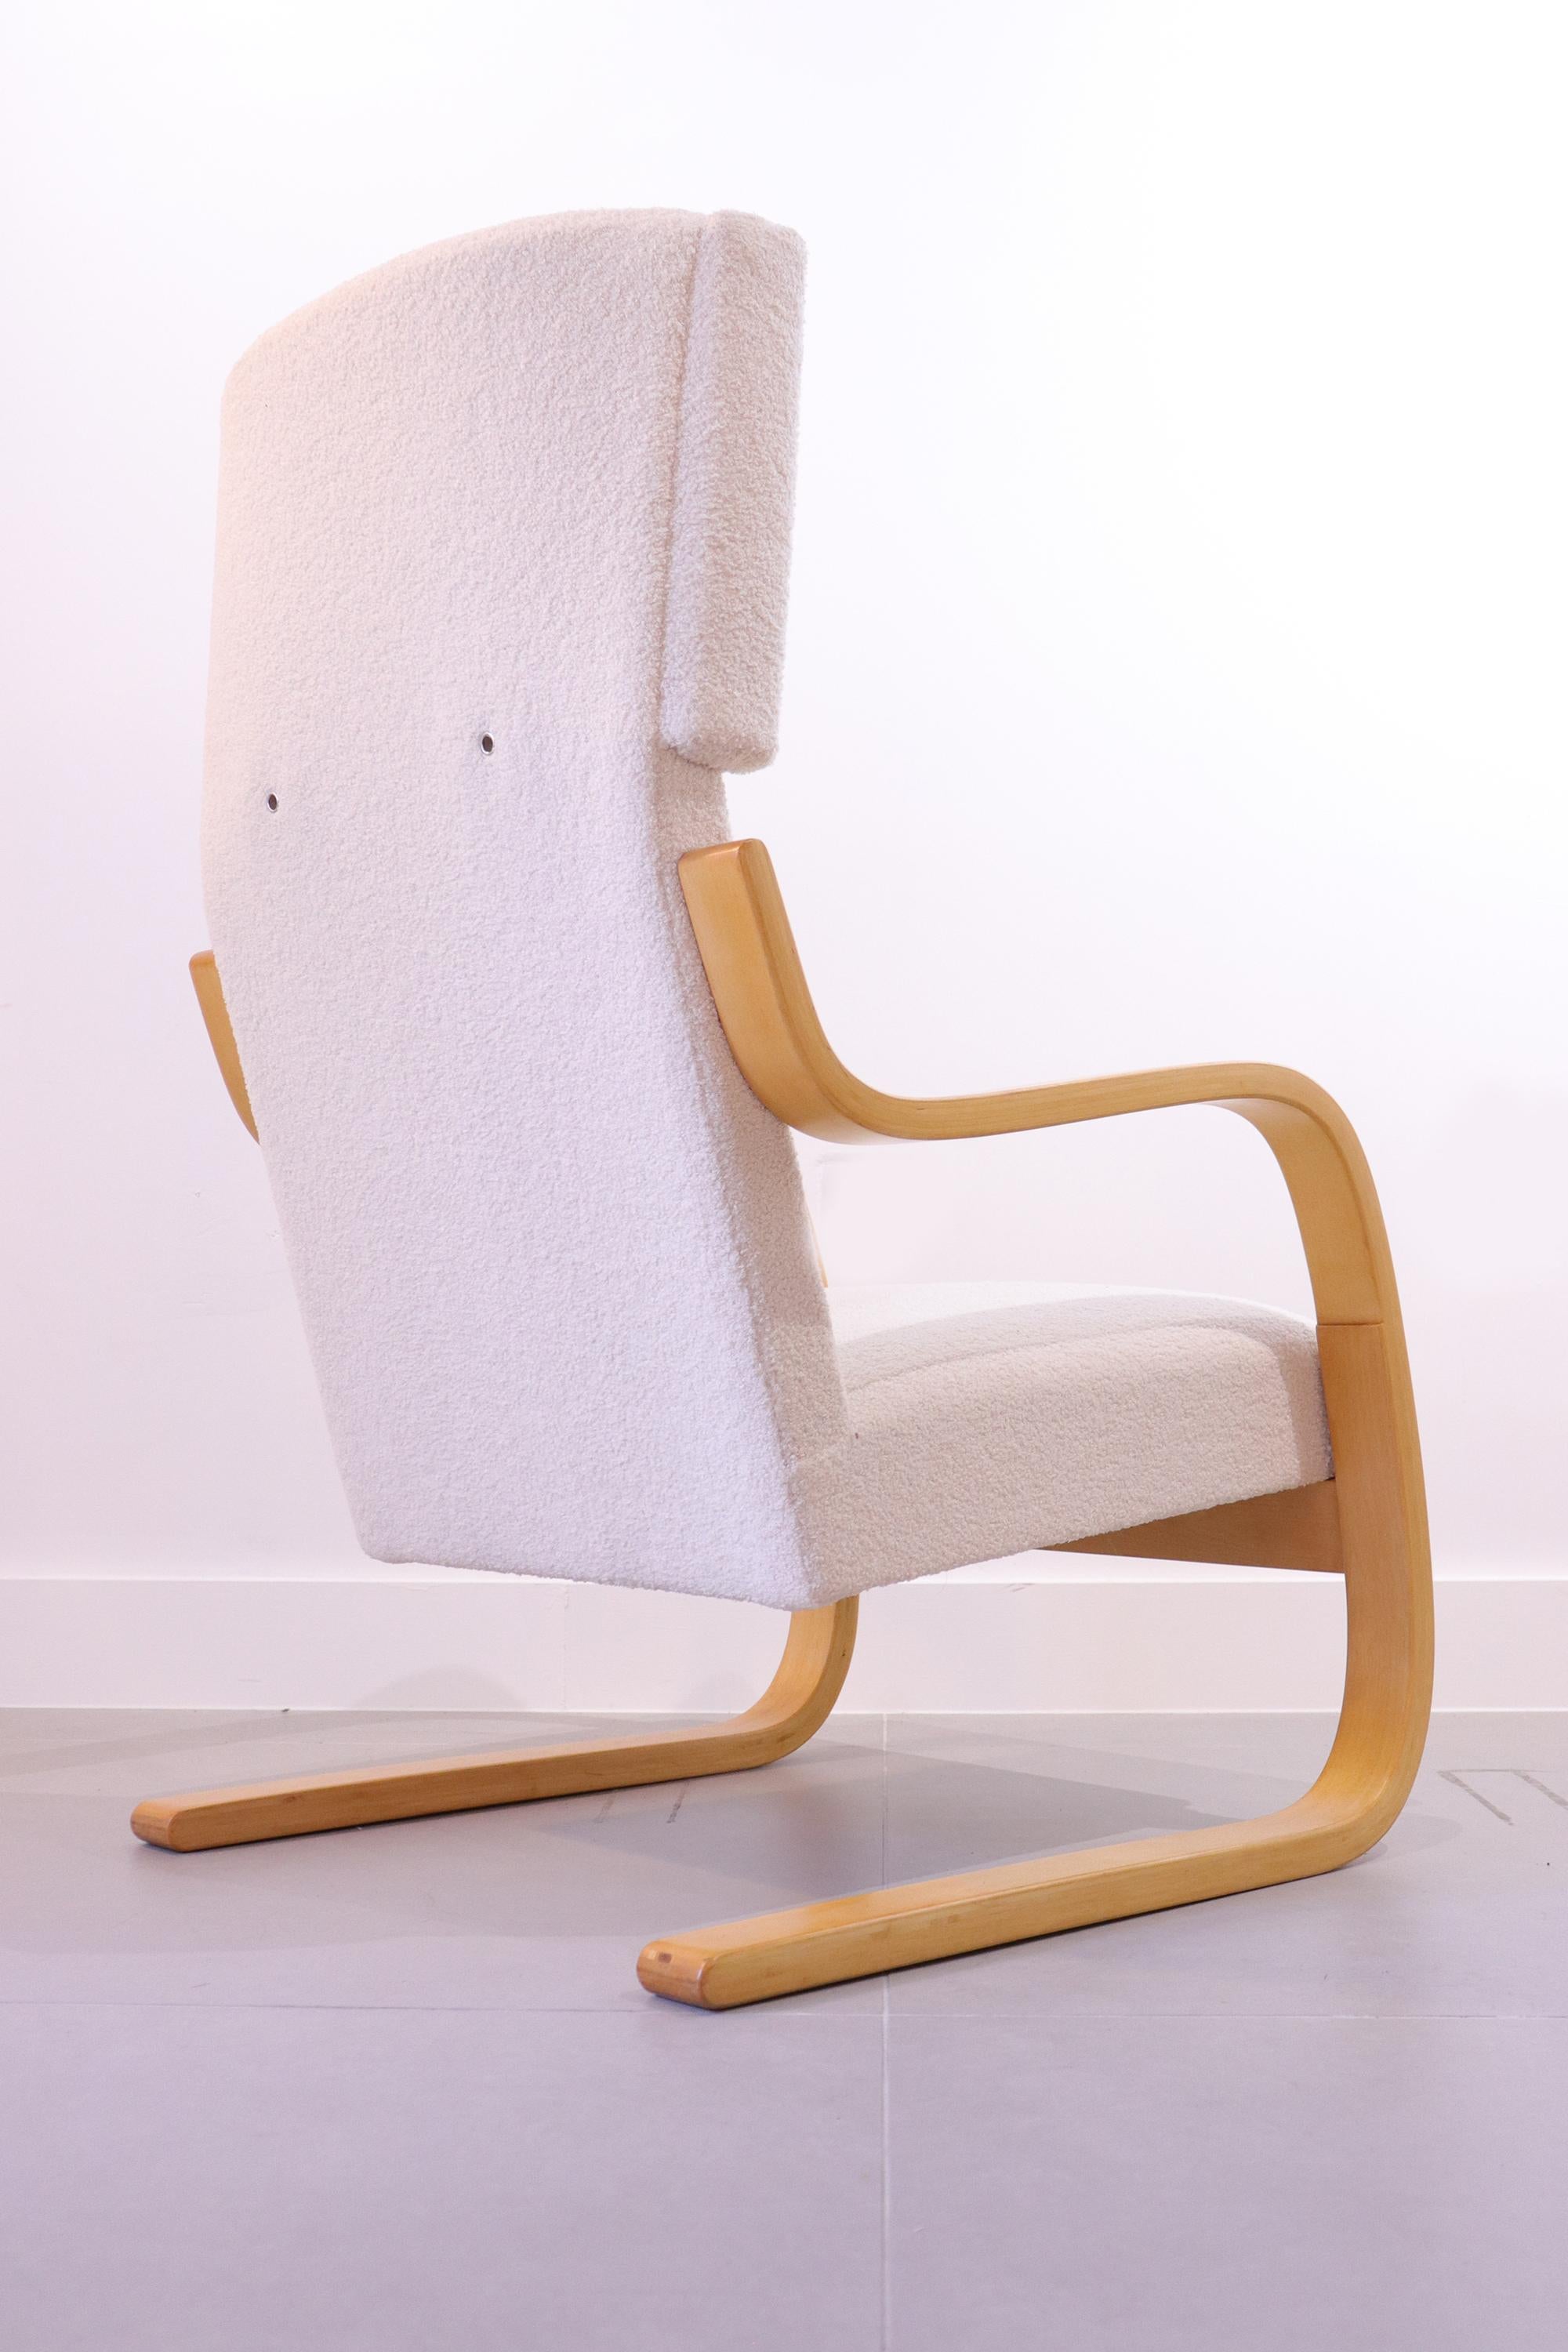 Alvar Aalto 401 Wingback Chair by Artek Finland, 1970s For Sale 1